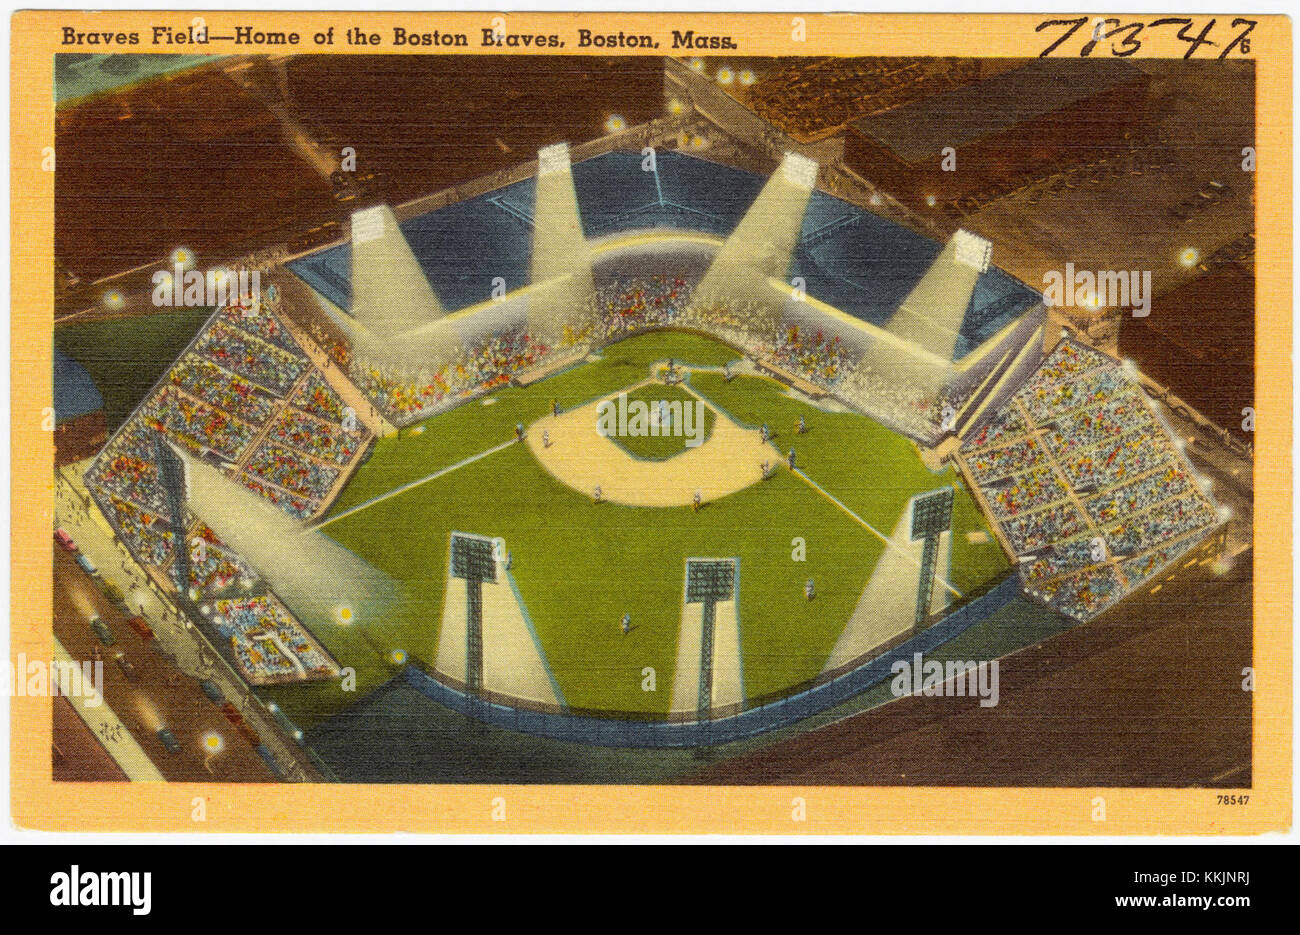 Braves Field -- Home of the Boston Braves, Boston, Mass (78547) Stock Photo